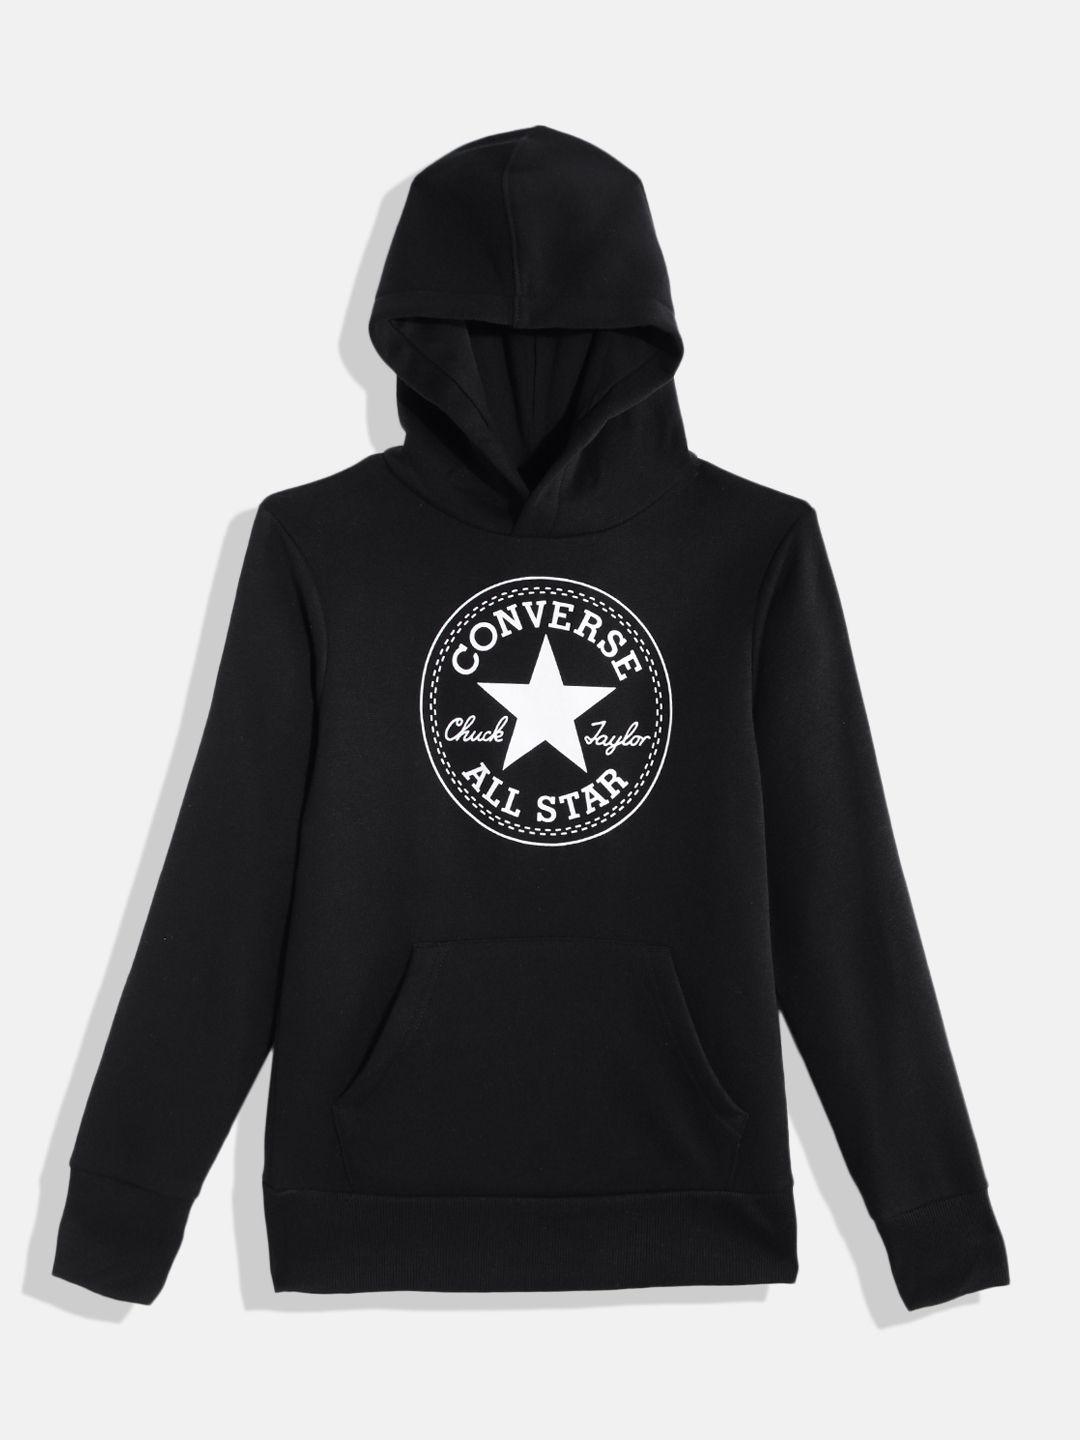 converse boys black hooded sweatshirt